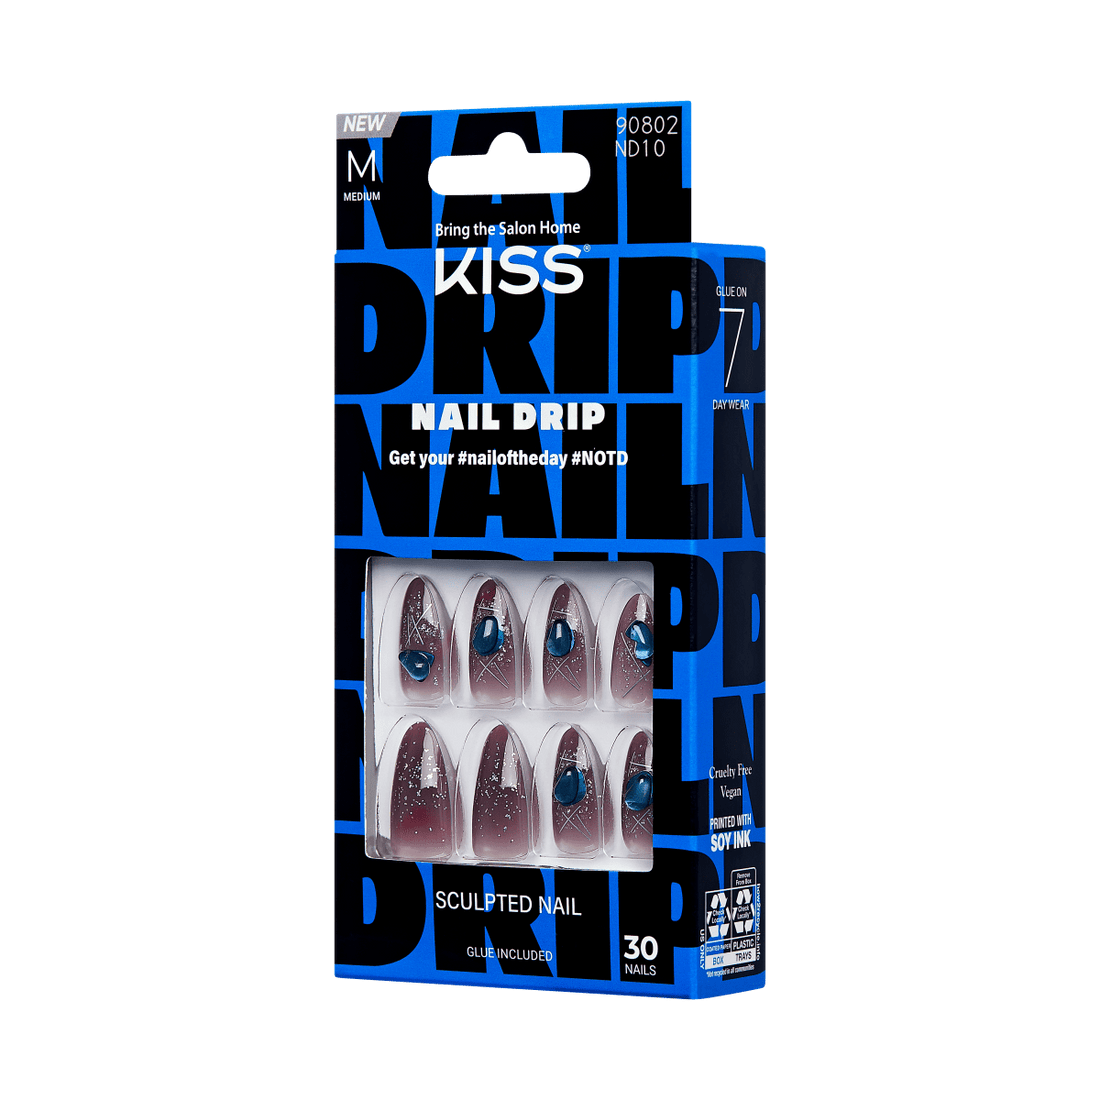 KISS Nail Drip - We Drip